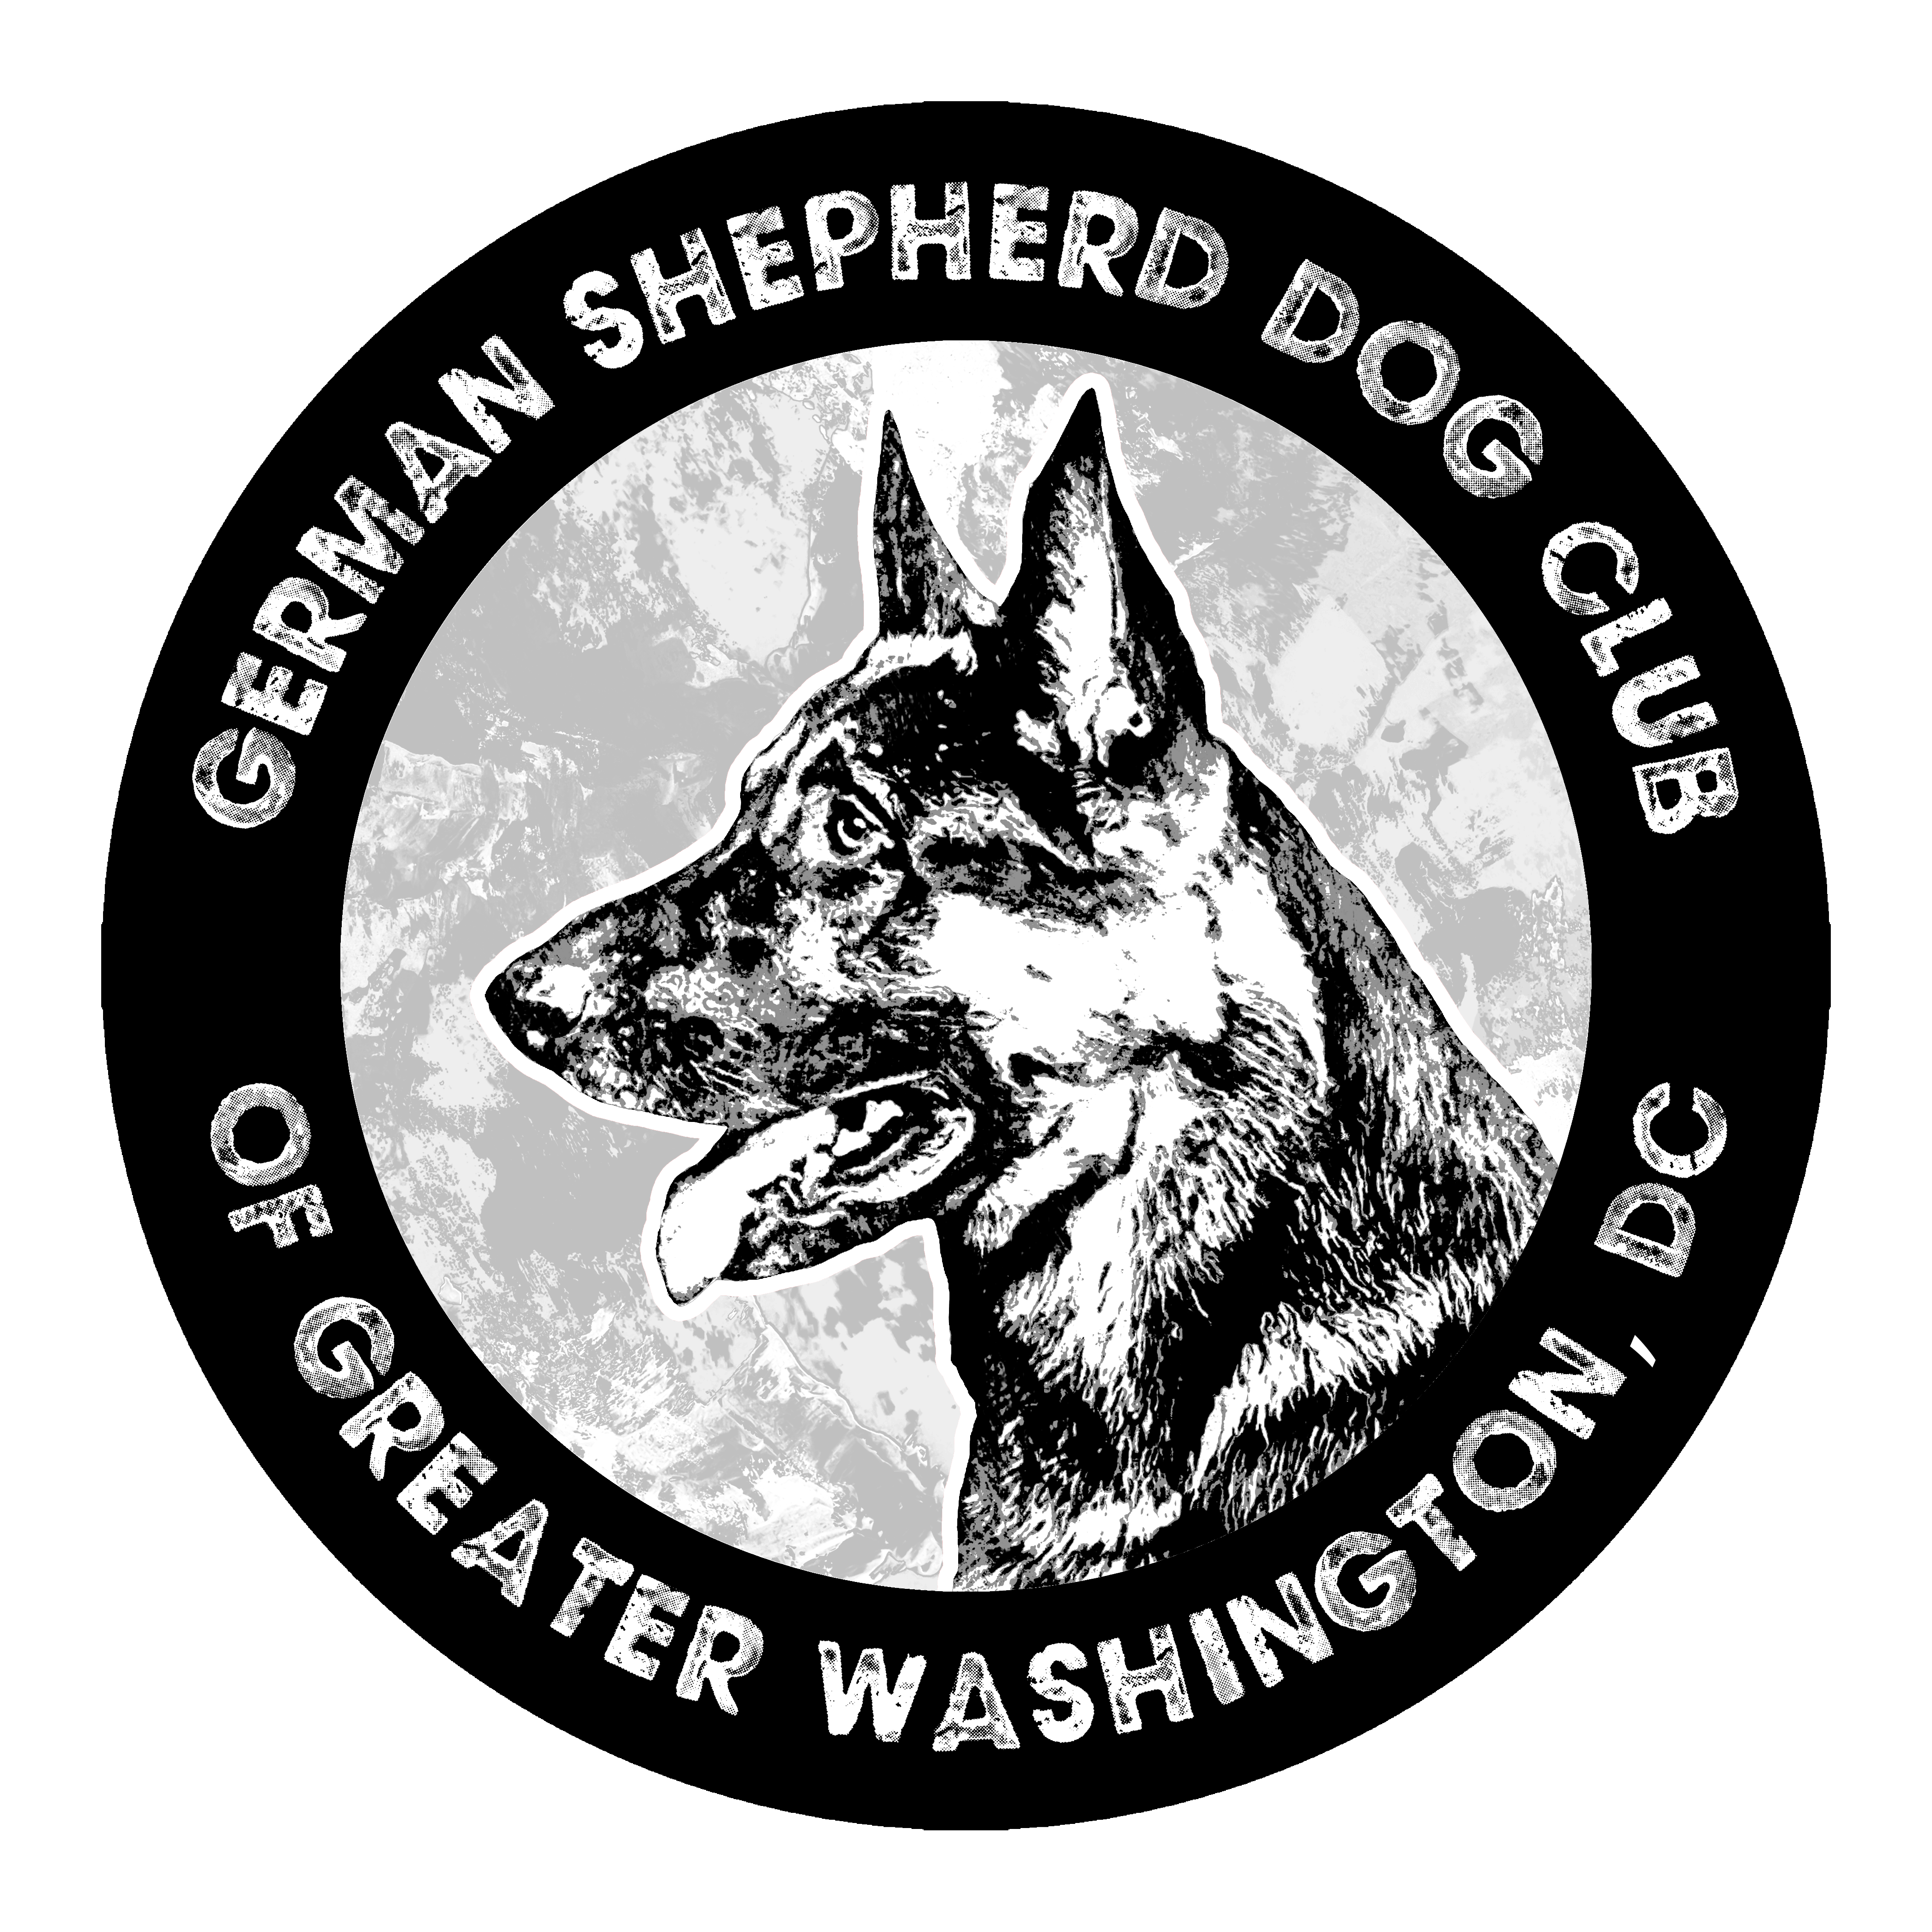 German Shepherd Dog Club of Greater Washington, DC Logo